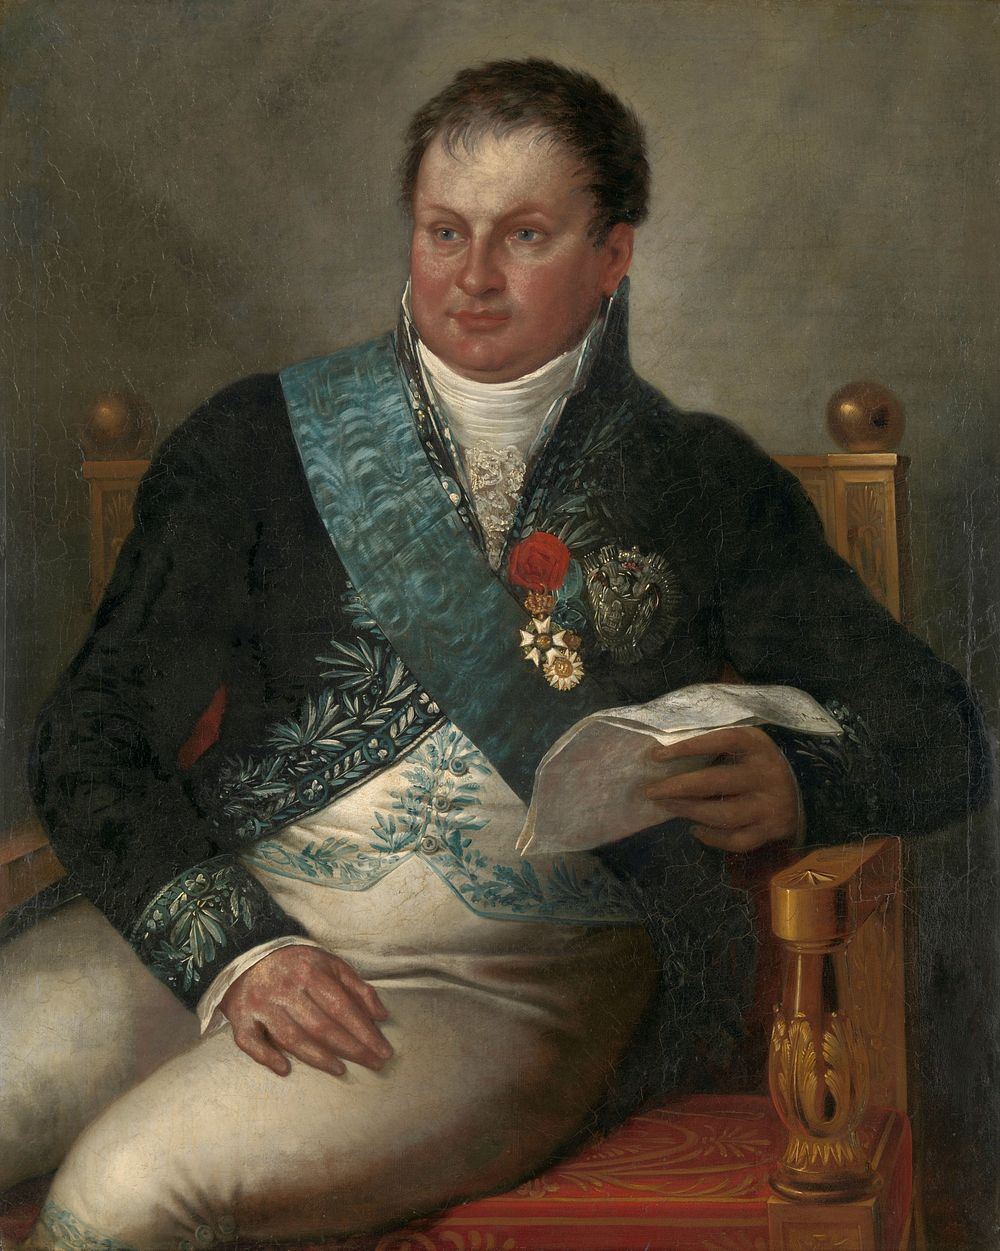 Portrait of Isaac Jan Alexander Gogel (c. 1811 - c. 1813) by Mattheus Ignatius van Bree